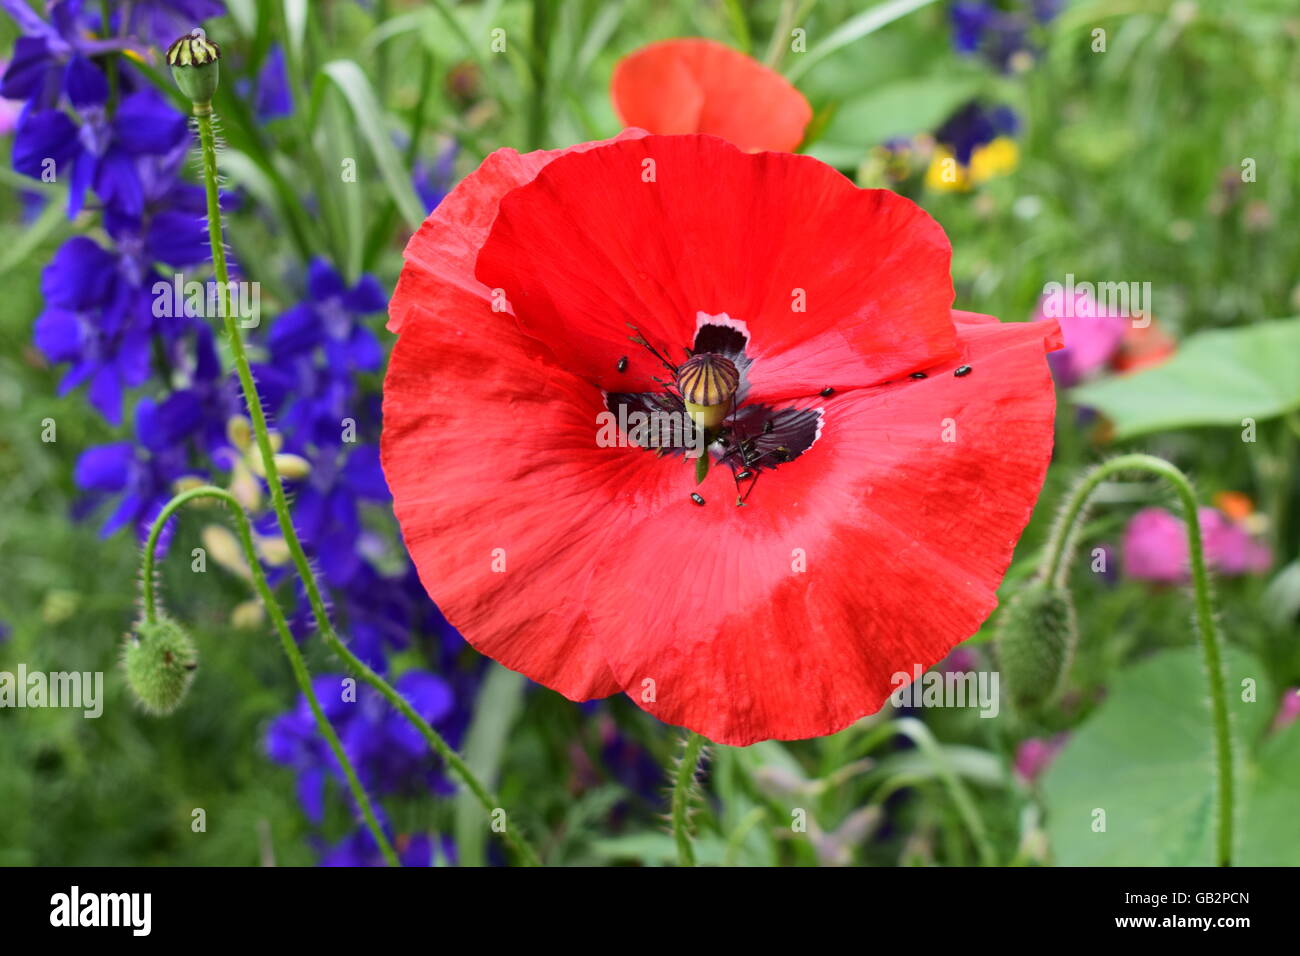 Small black flies against vibrant red poppy leaves Stock Photo